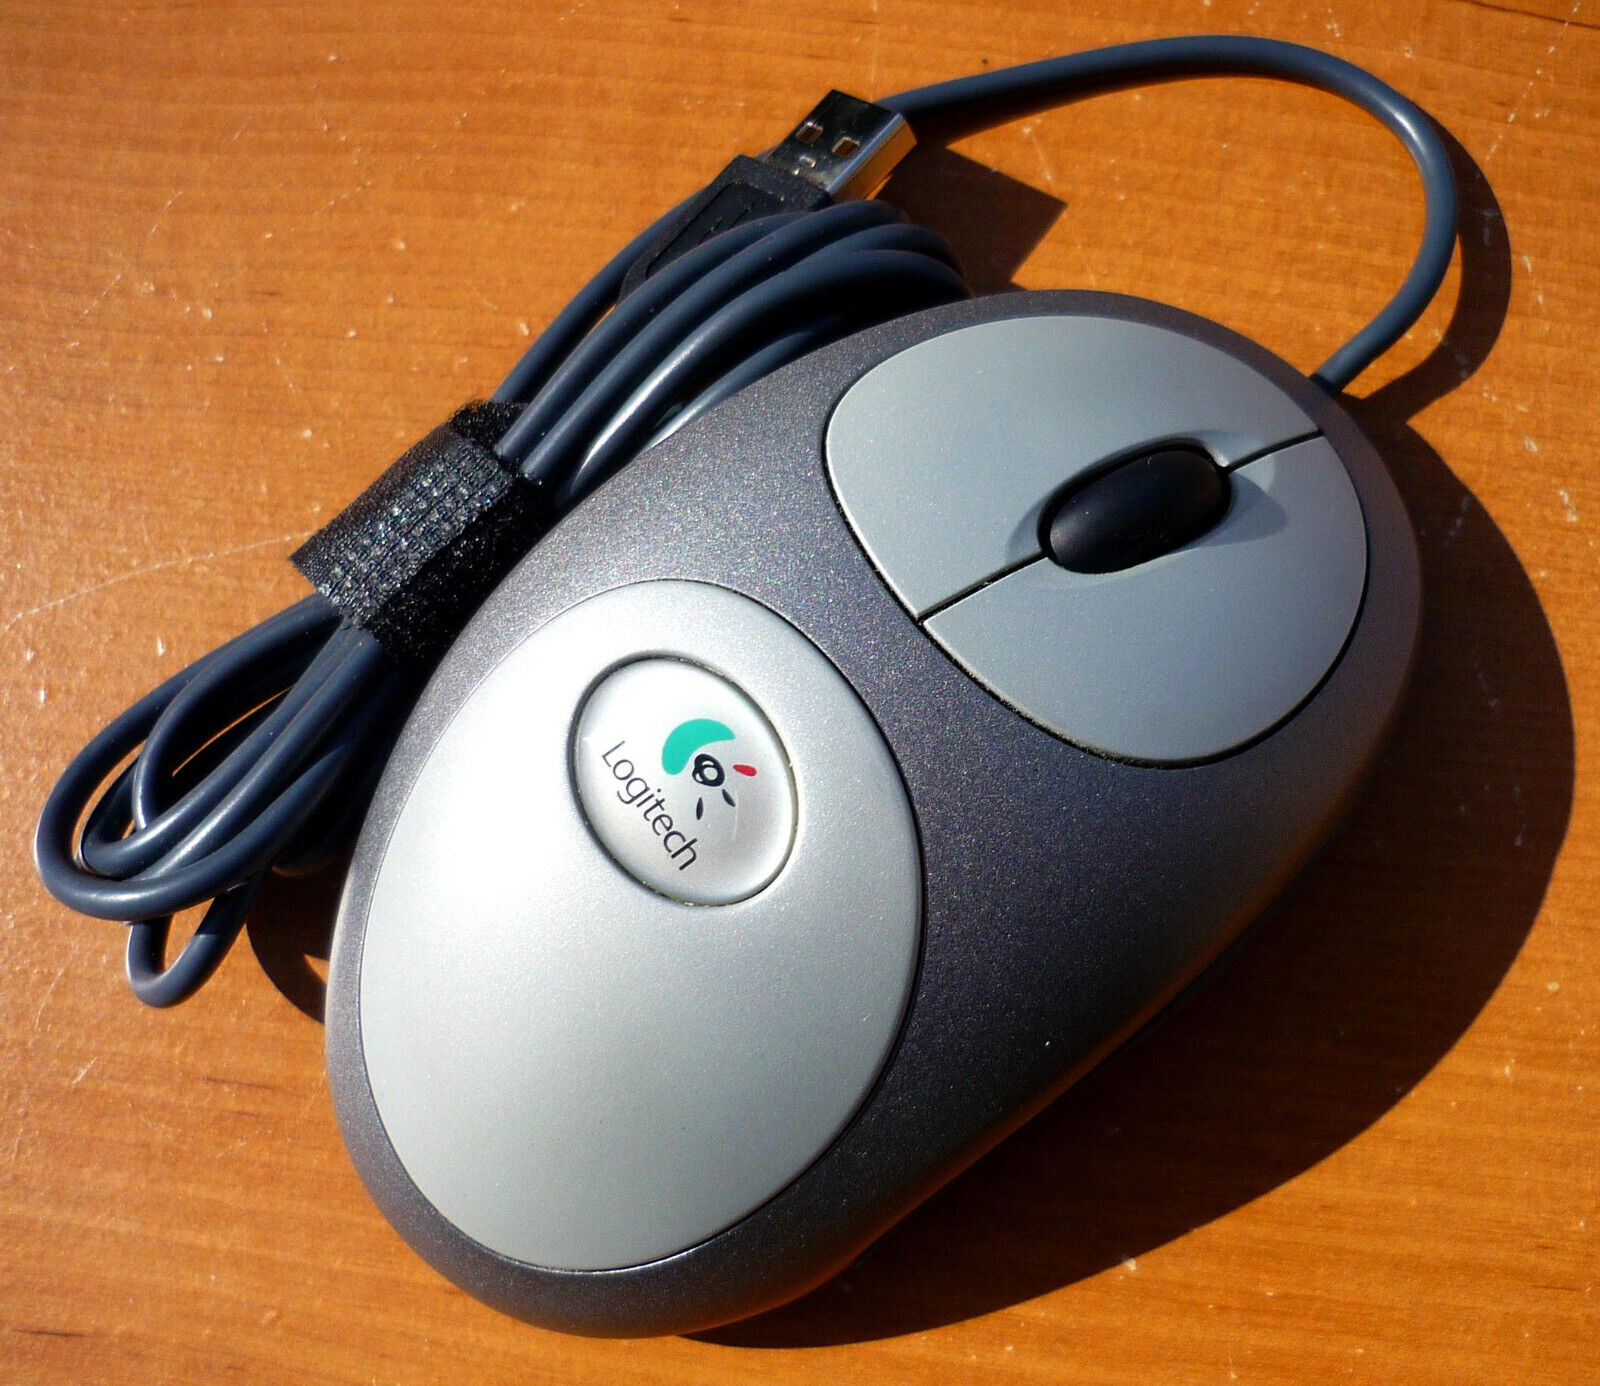 Logitech Mouseman Dual Optical USB Wheel Mouse M-BL63B - Cleaned & Tested